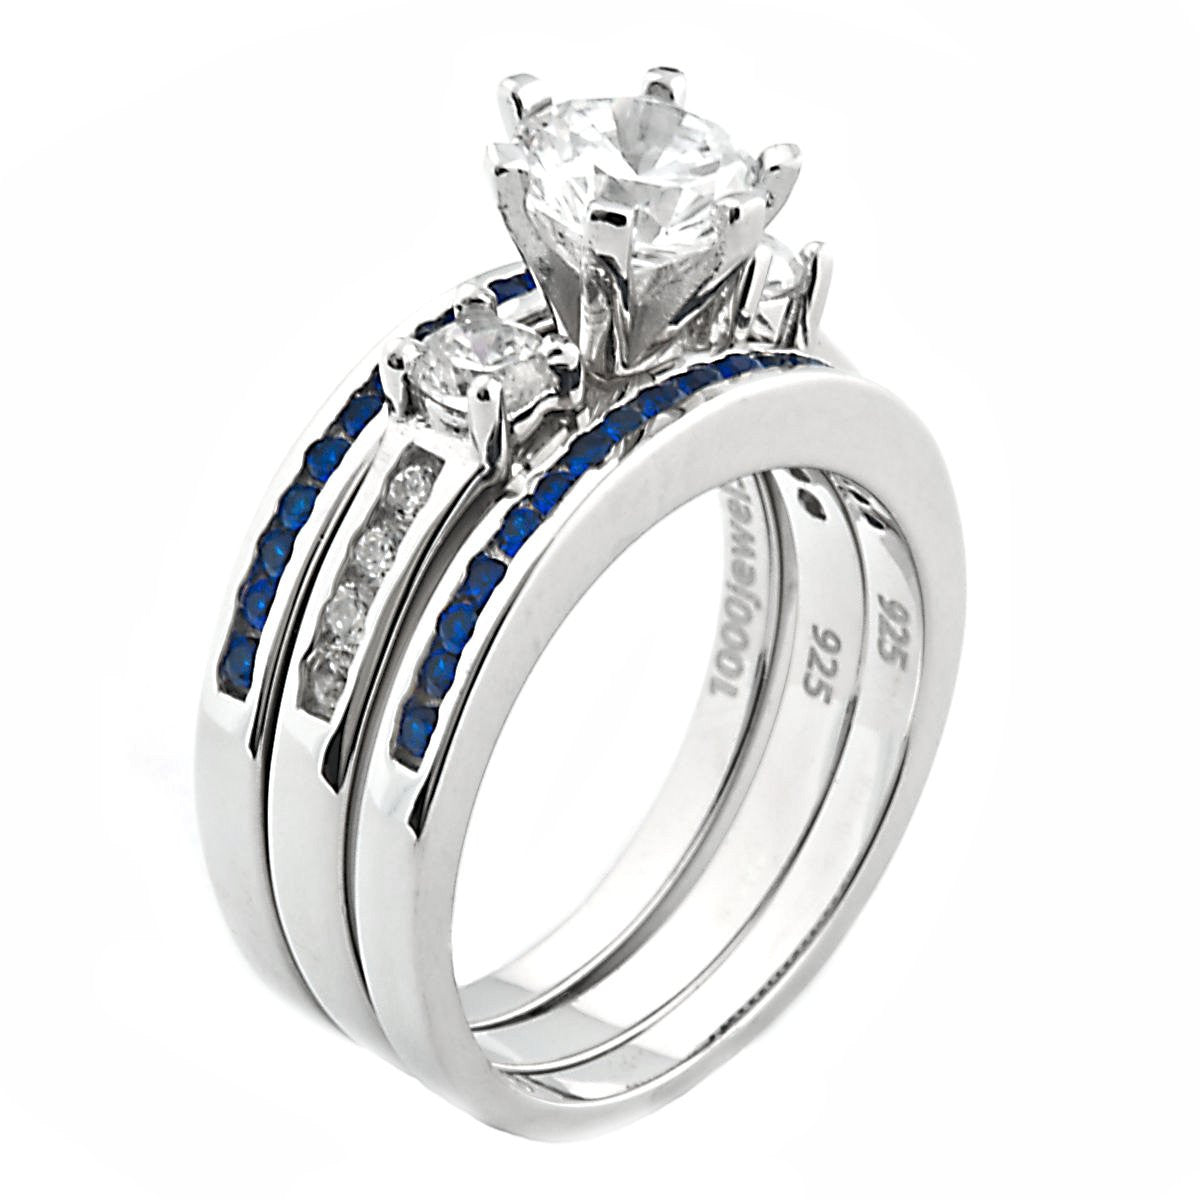 Lakoda 3SA: Stunning 1.58c IOF Wedding Jewelers Ring - Set Sapphire CZ Pc 3 Trustmark and